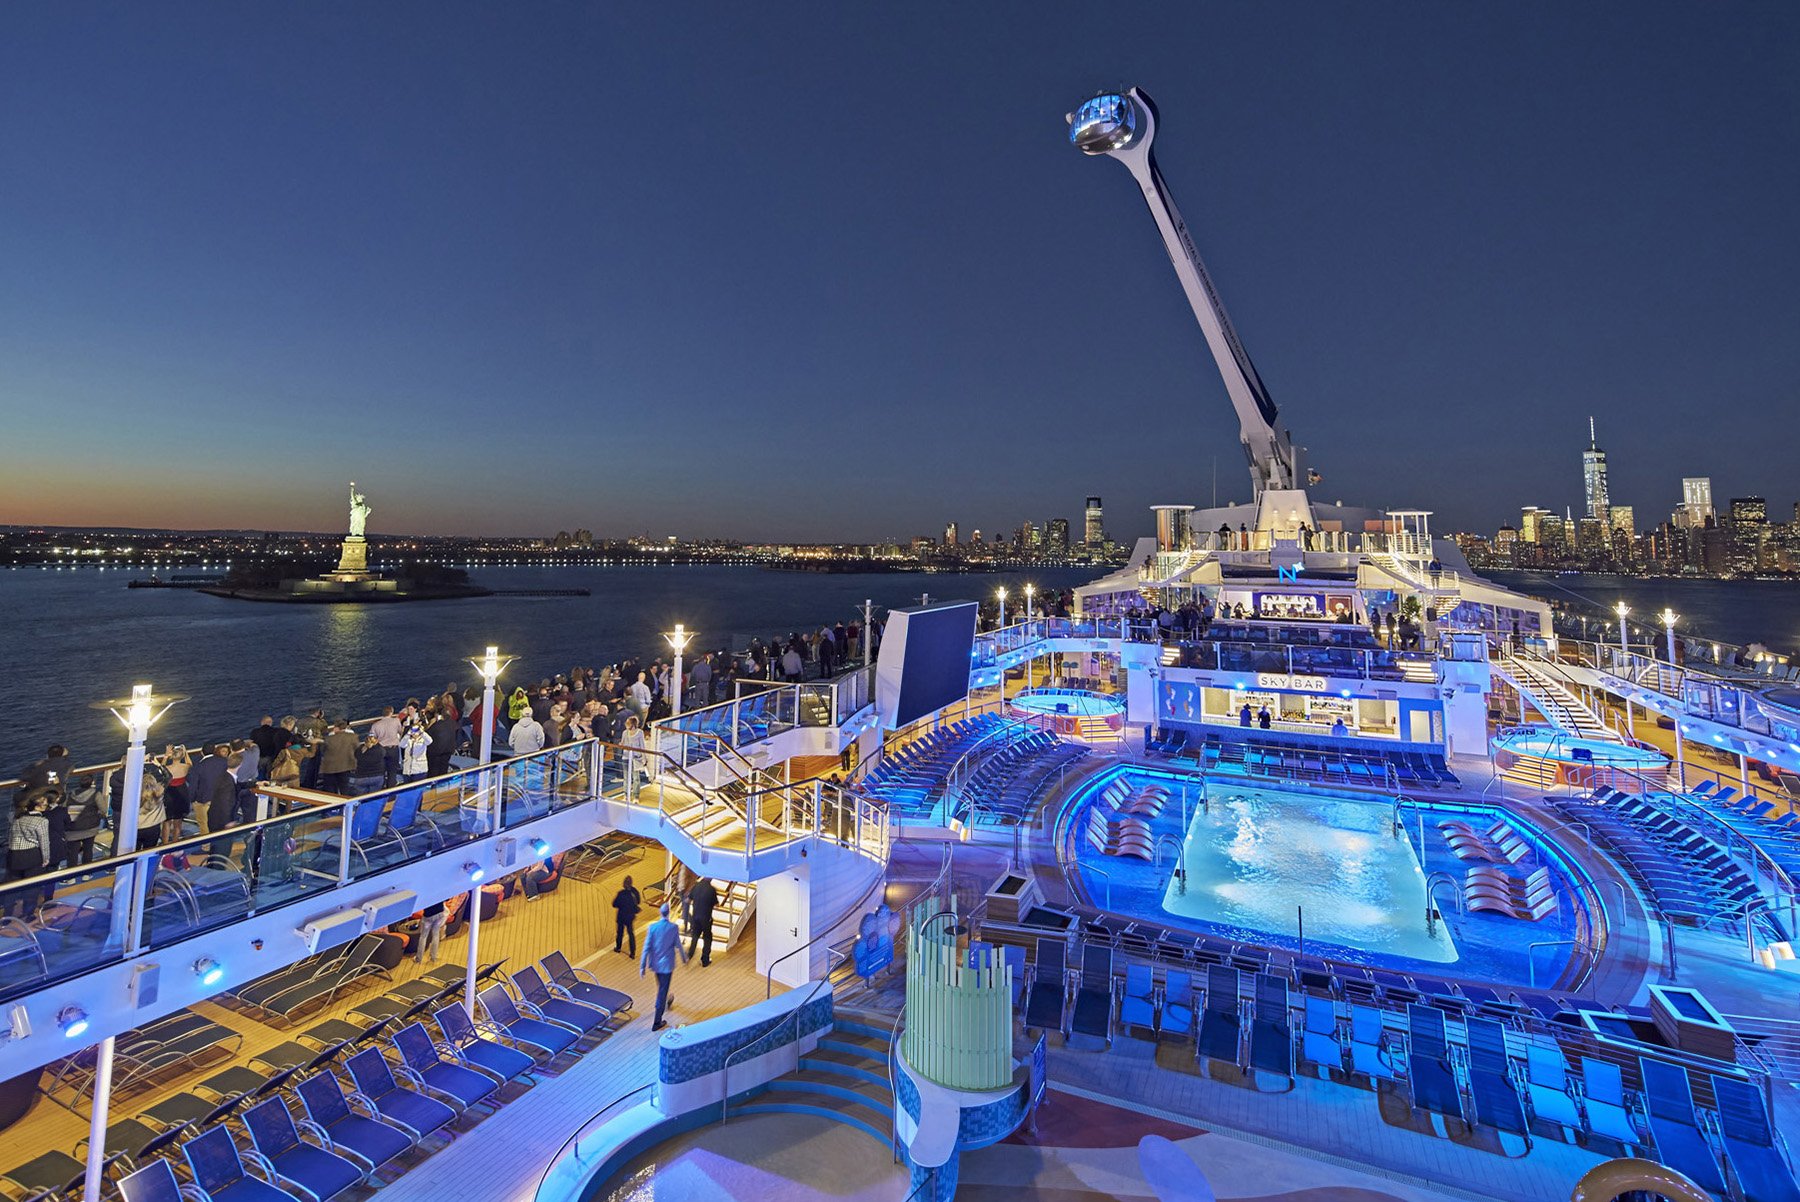 Quantum of the Seas / Royal Caribbean Cruise Lines 